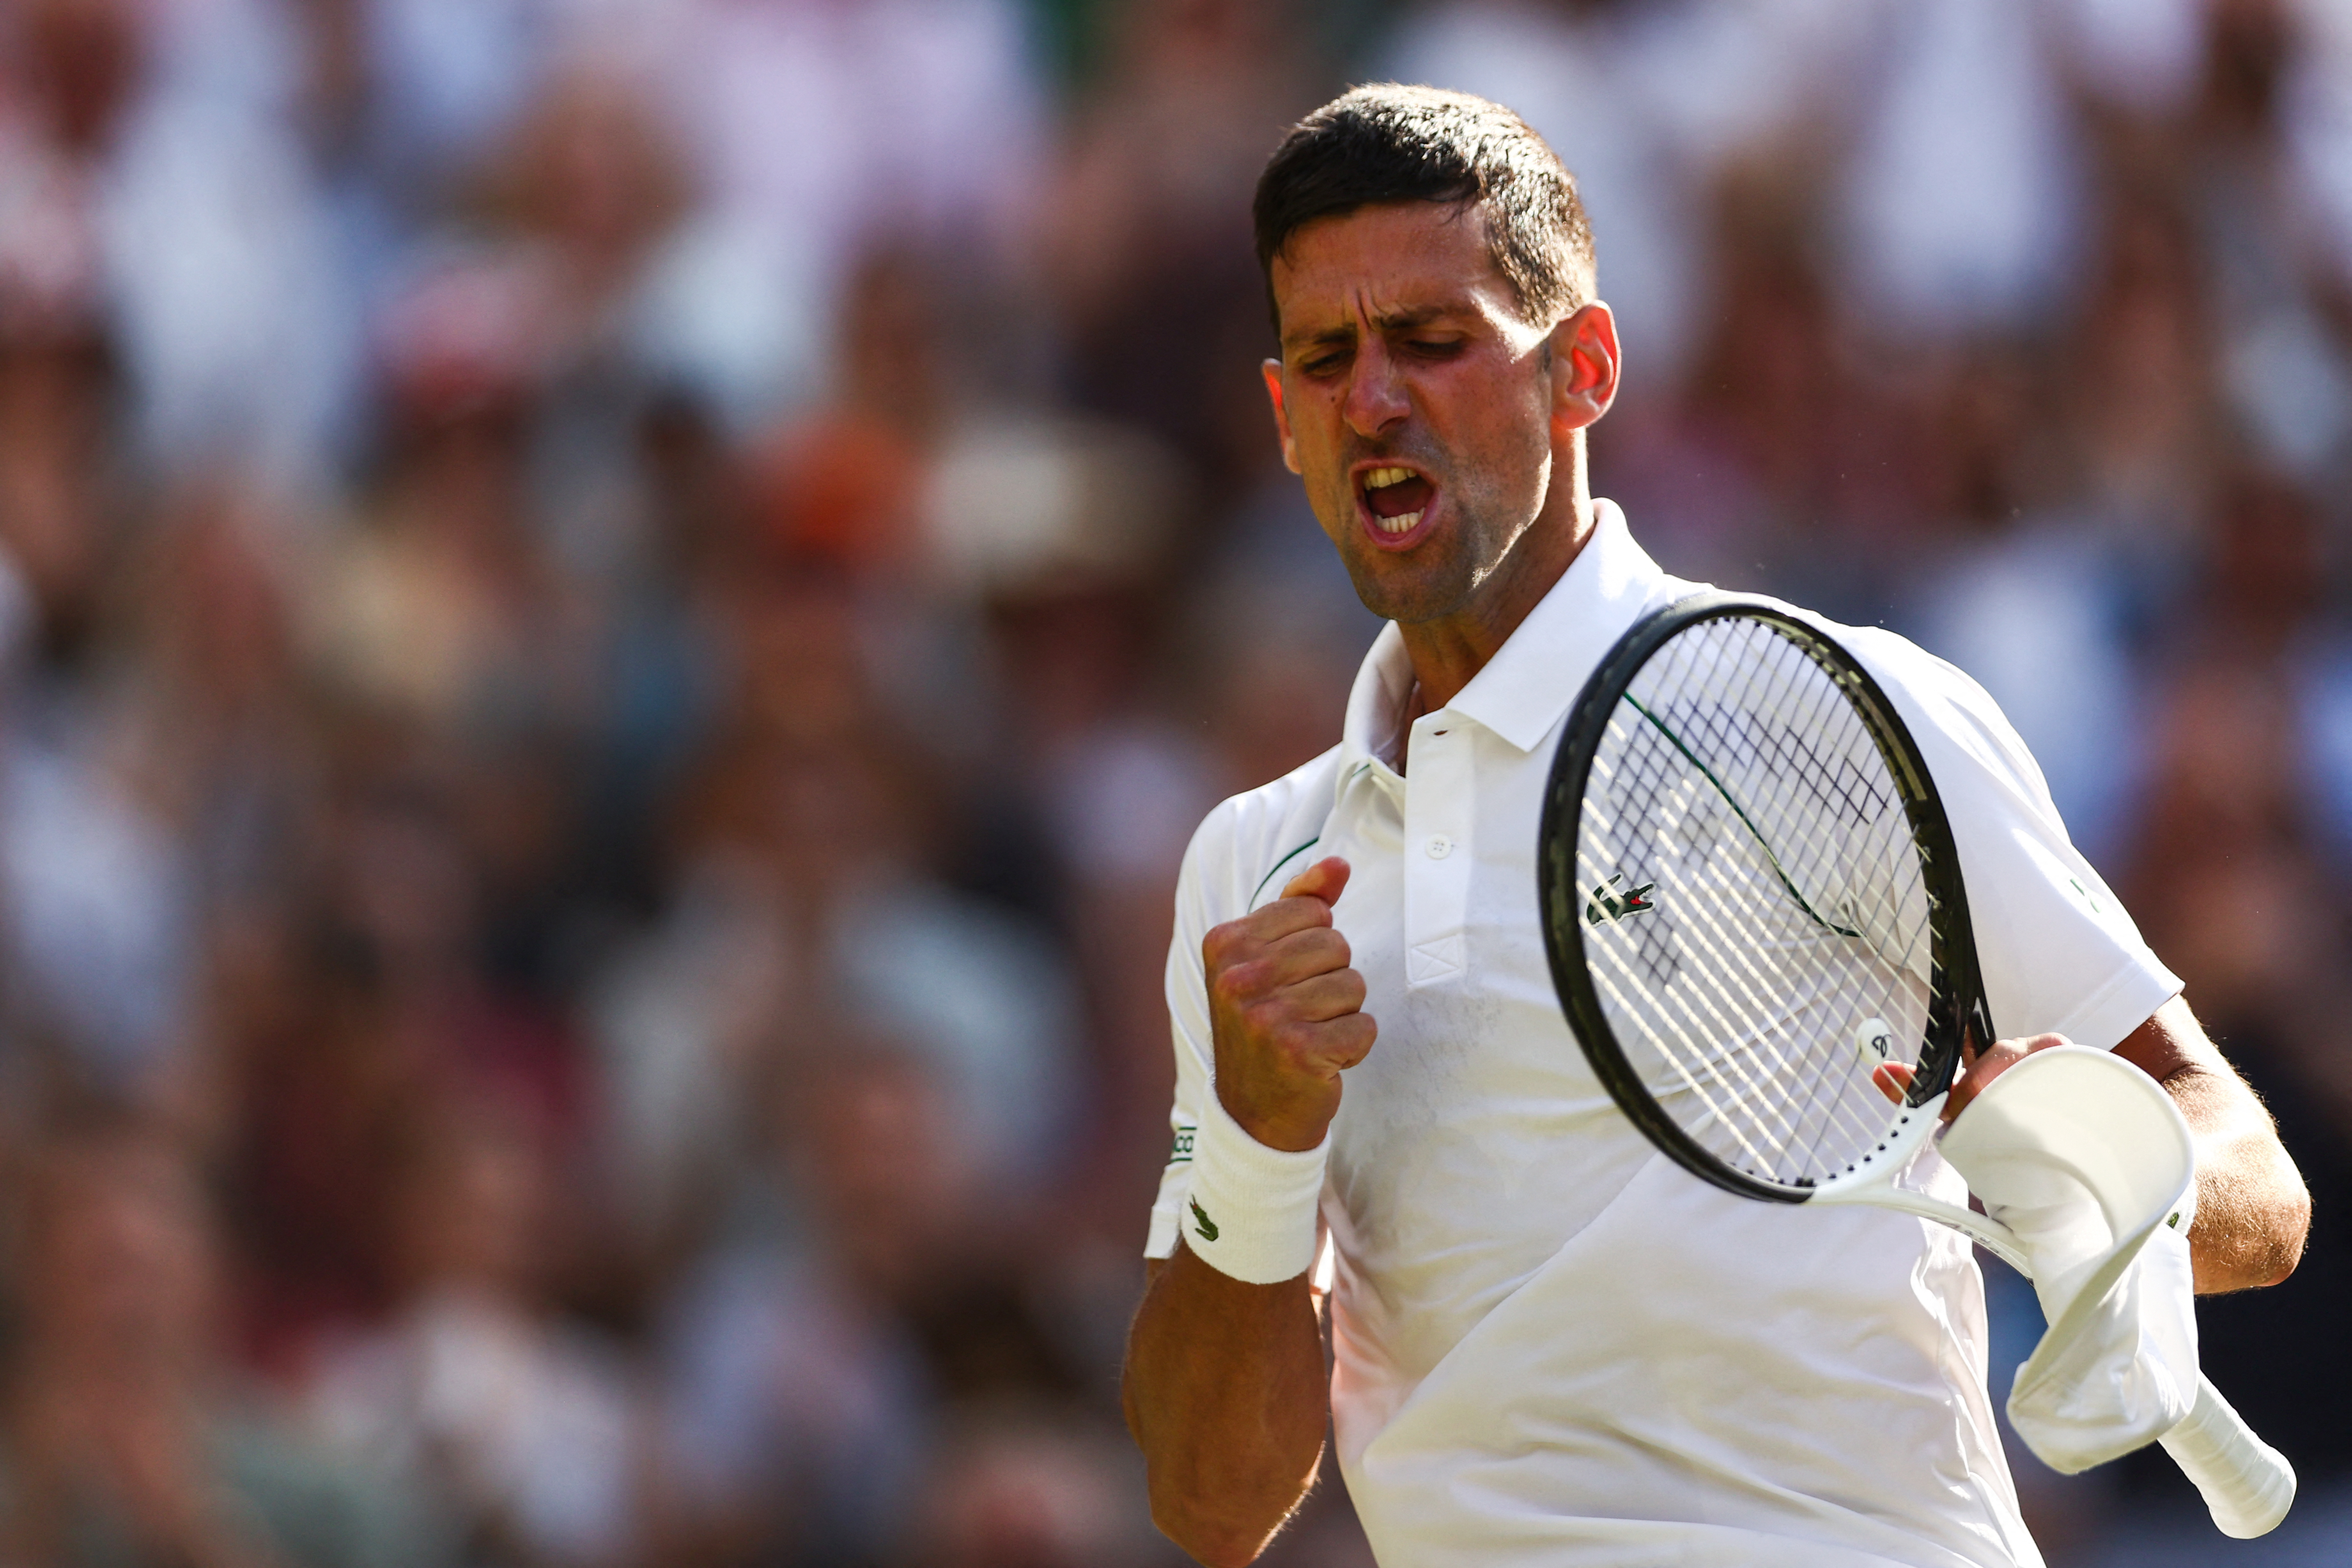 Wimbledon 2022 Men's Singles Final, Novak Djokovic vs Nick Kyrgios: When And Where To Watch Live Telecast, Live Streaming